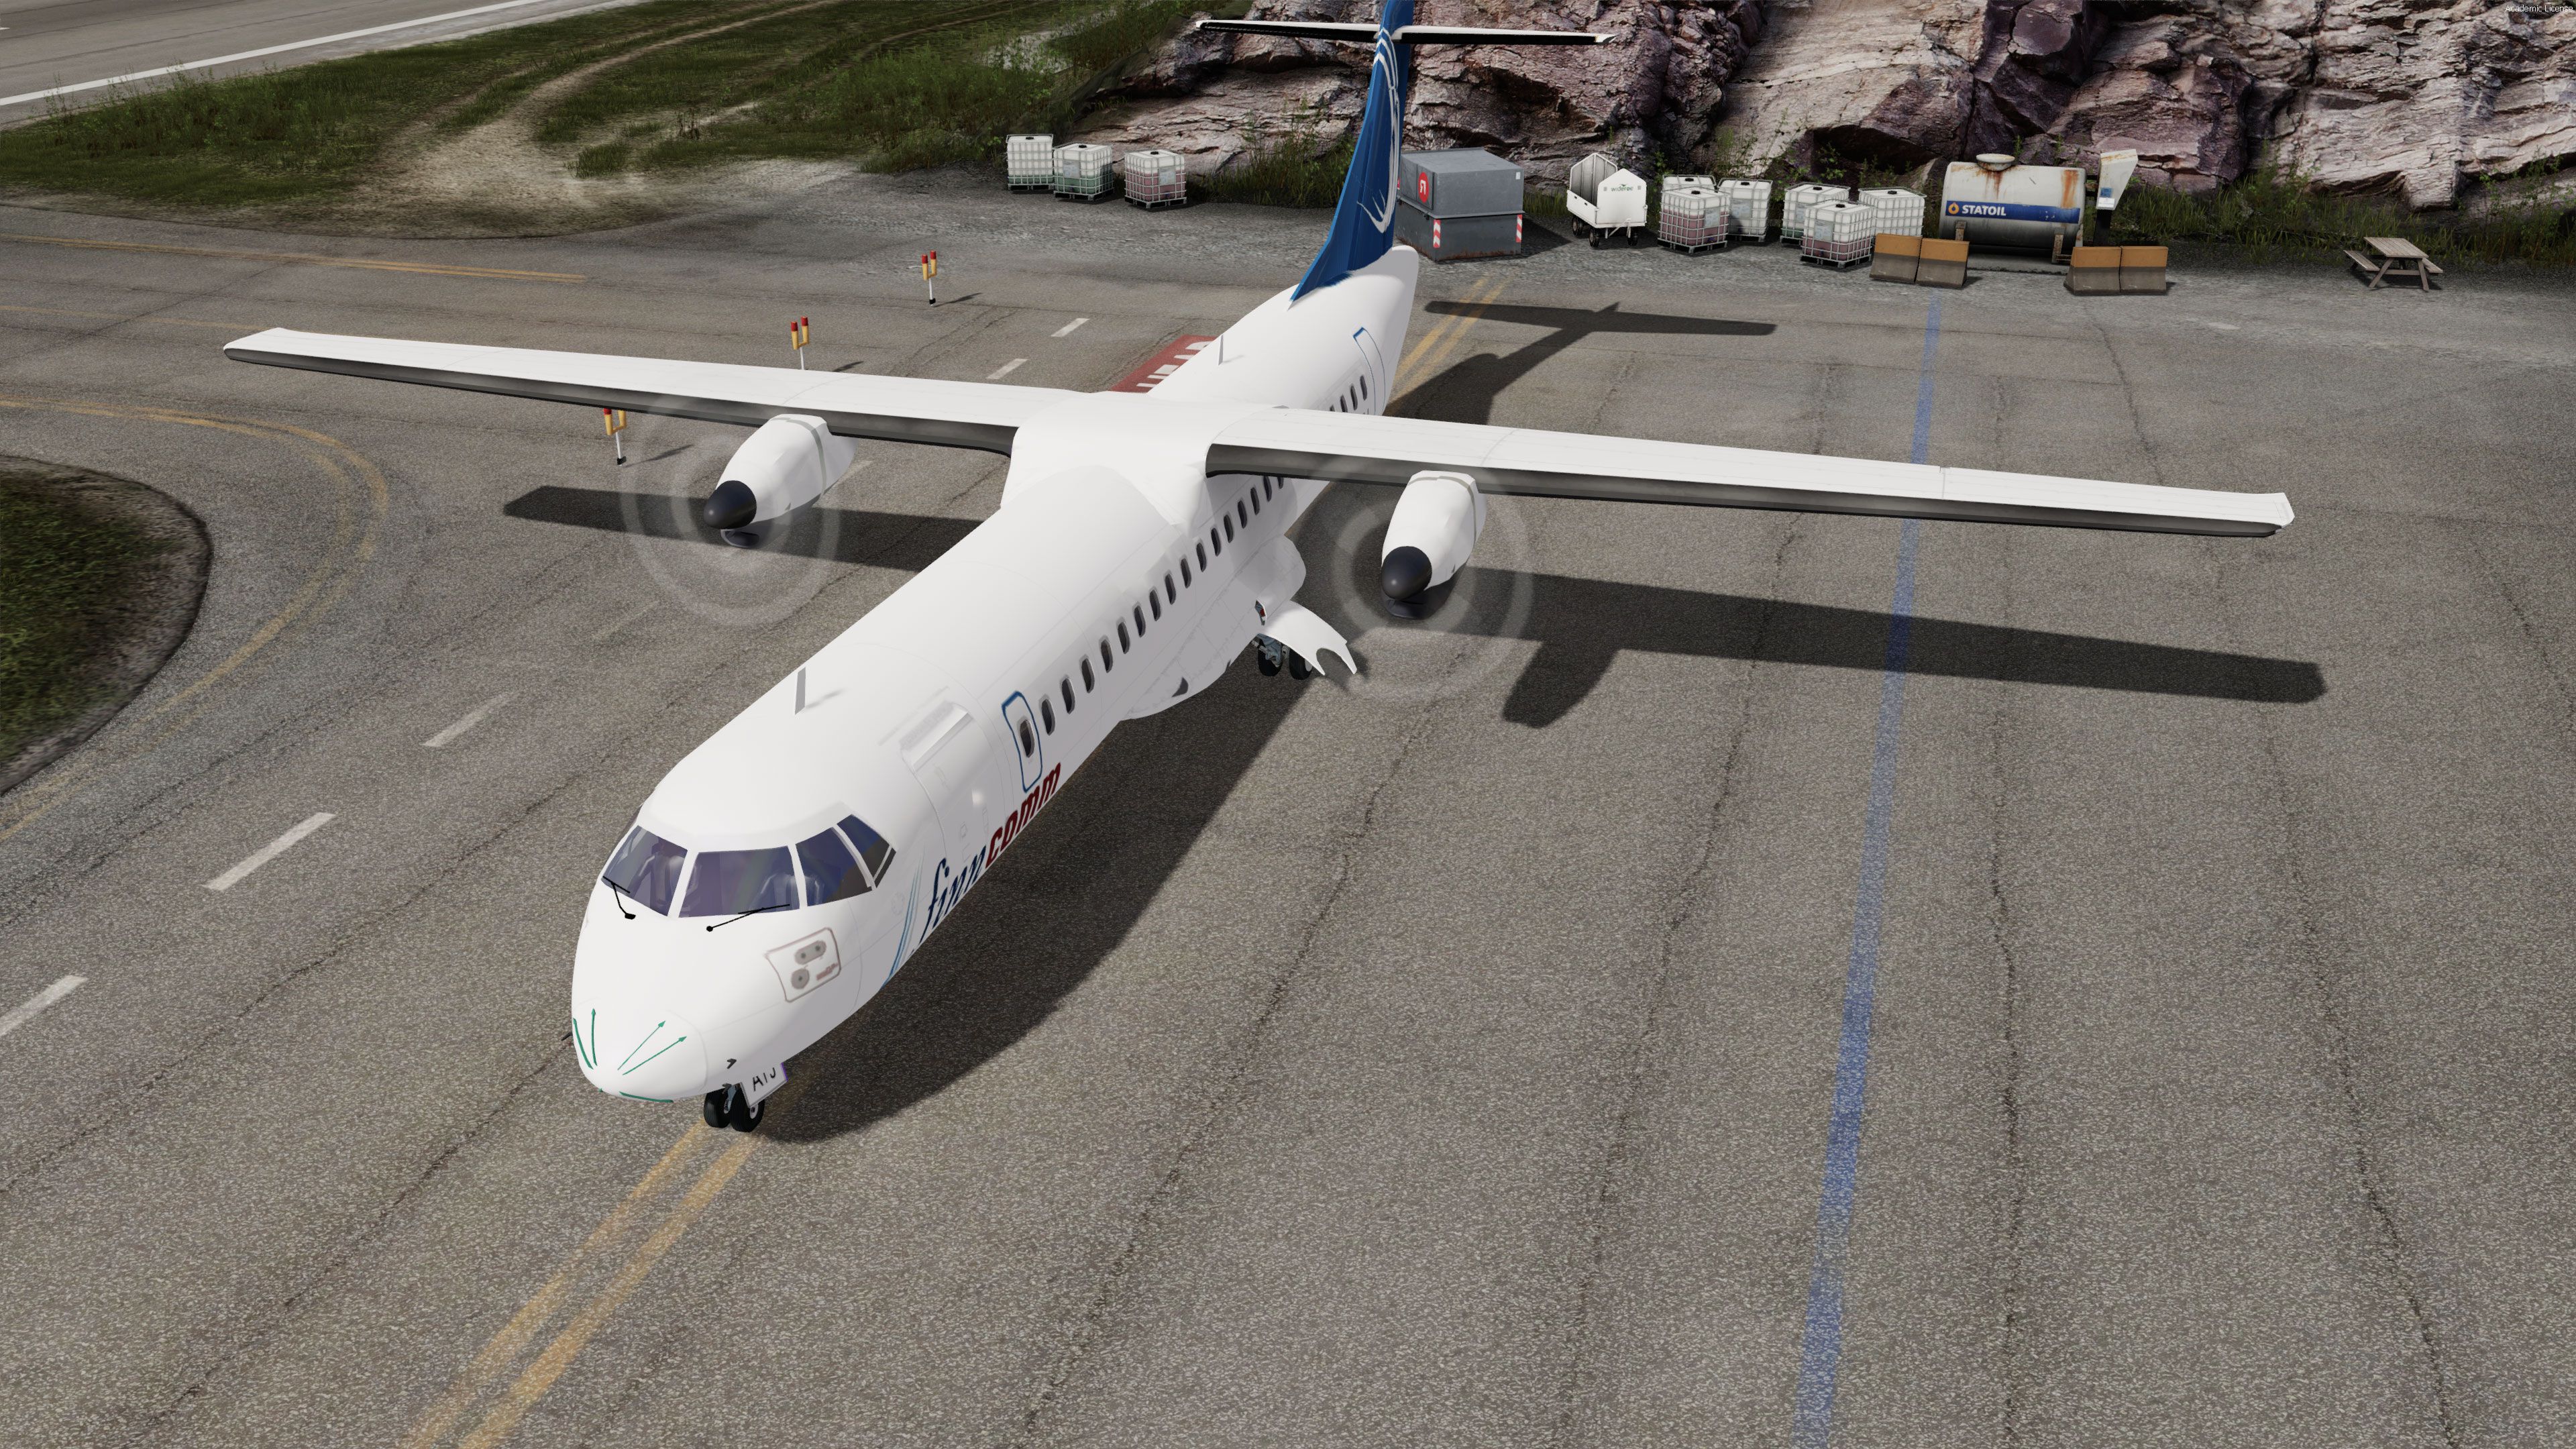  Flight Simulator Add-ons for FSX and Prepar3D